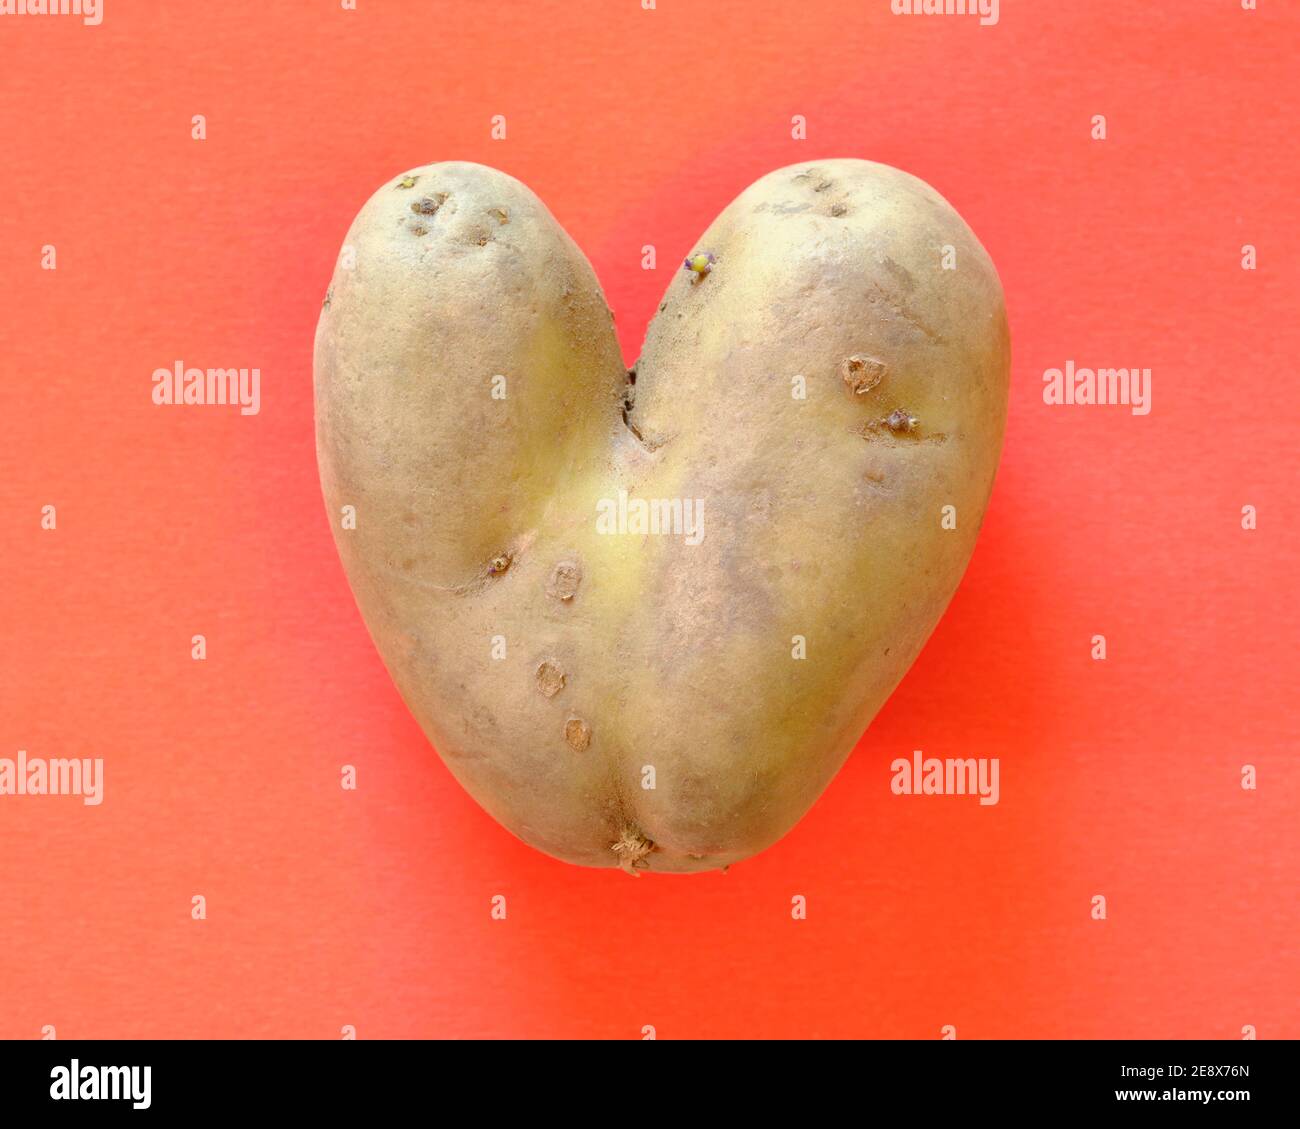 Heart shaped misshapen potato on red Stock Photo